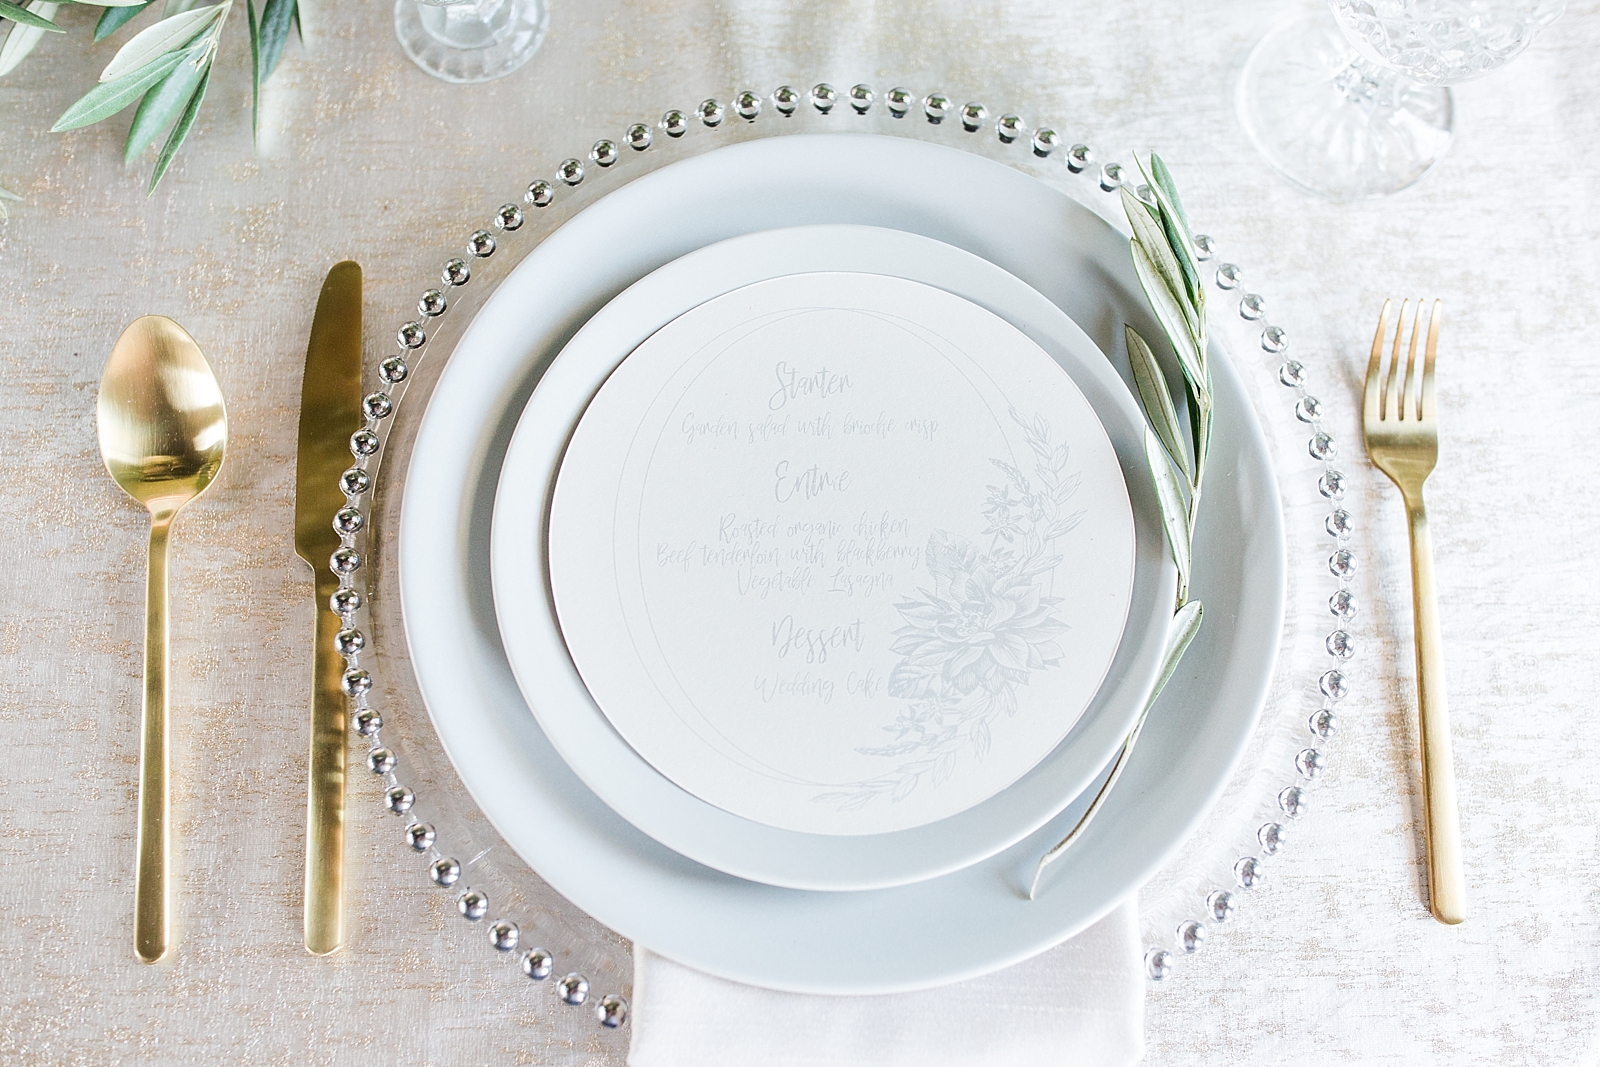 Atlanta Georgia Wedding reception place setting with grey plates and gold utensils Photo